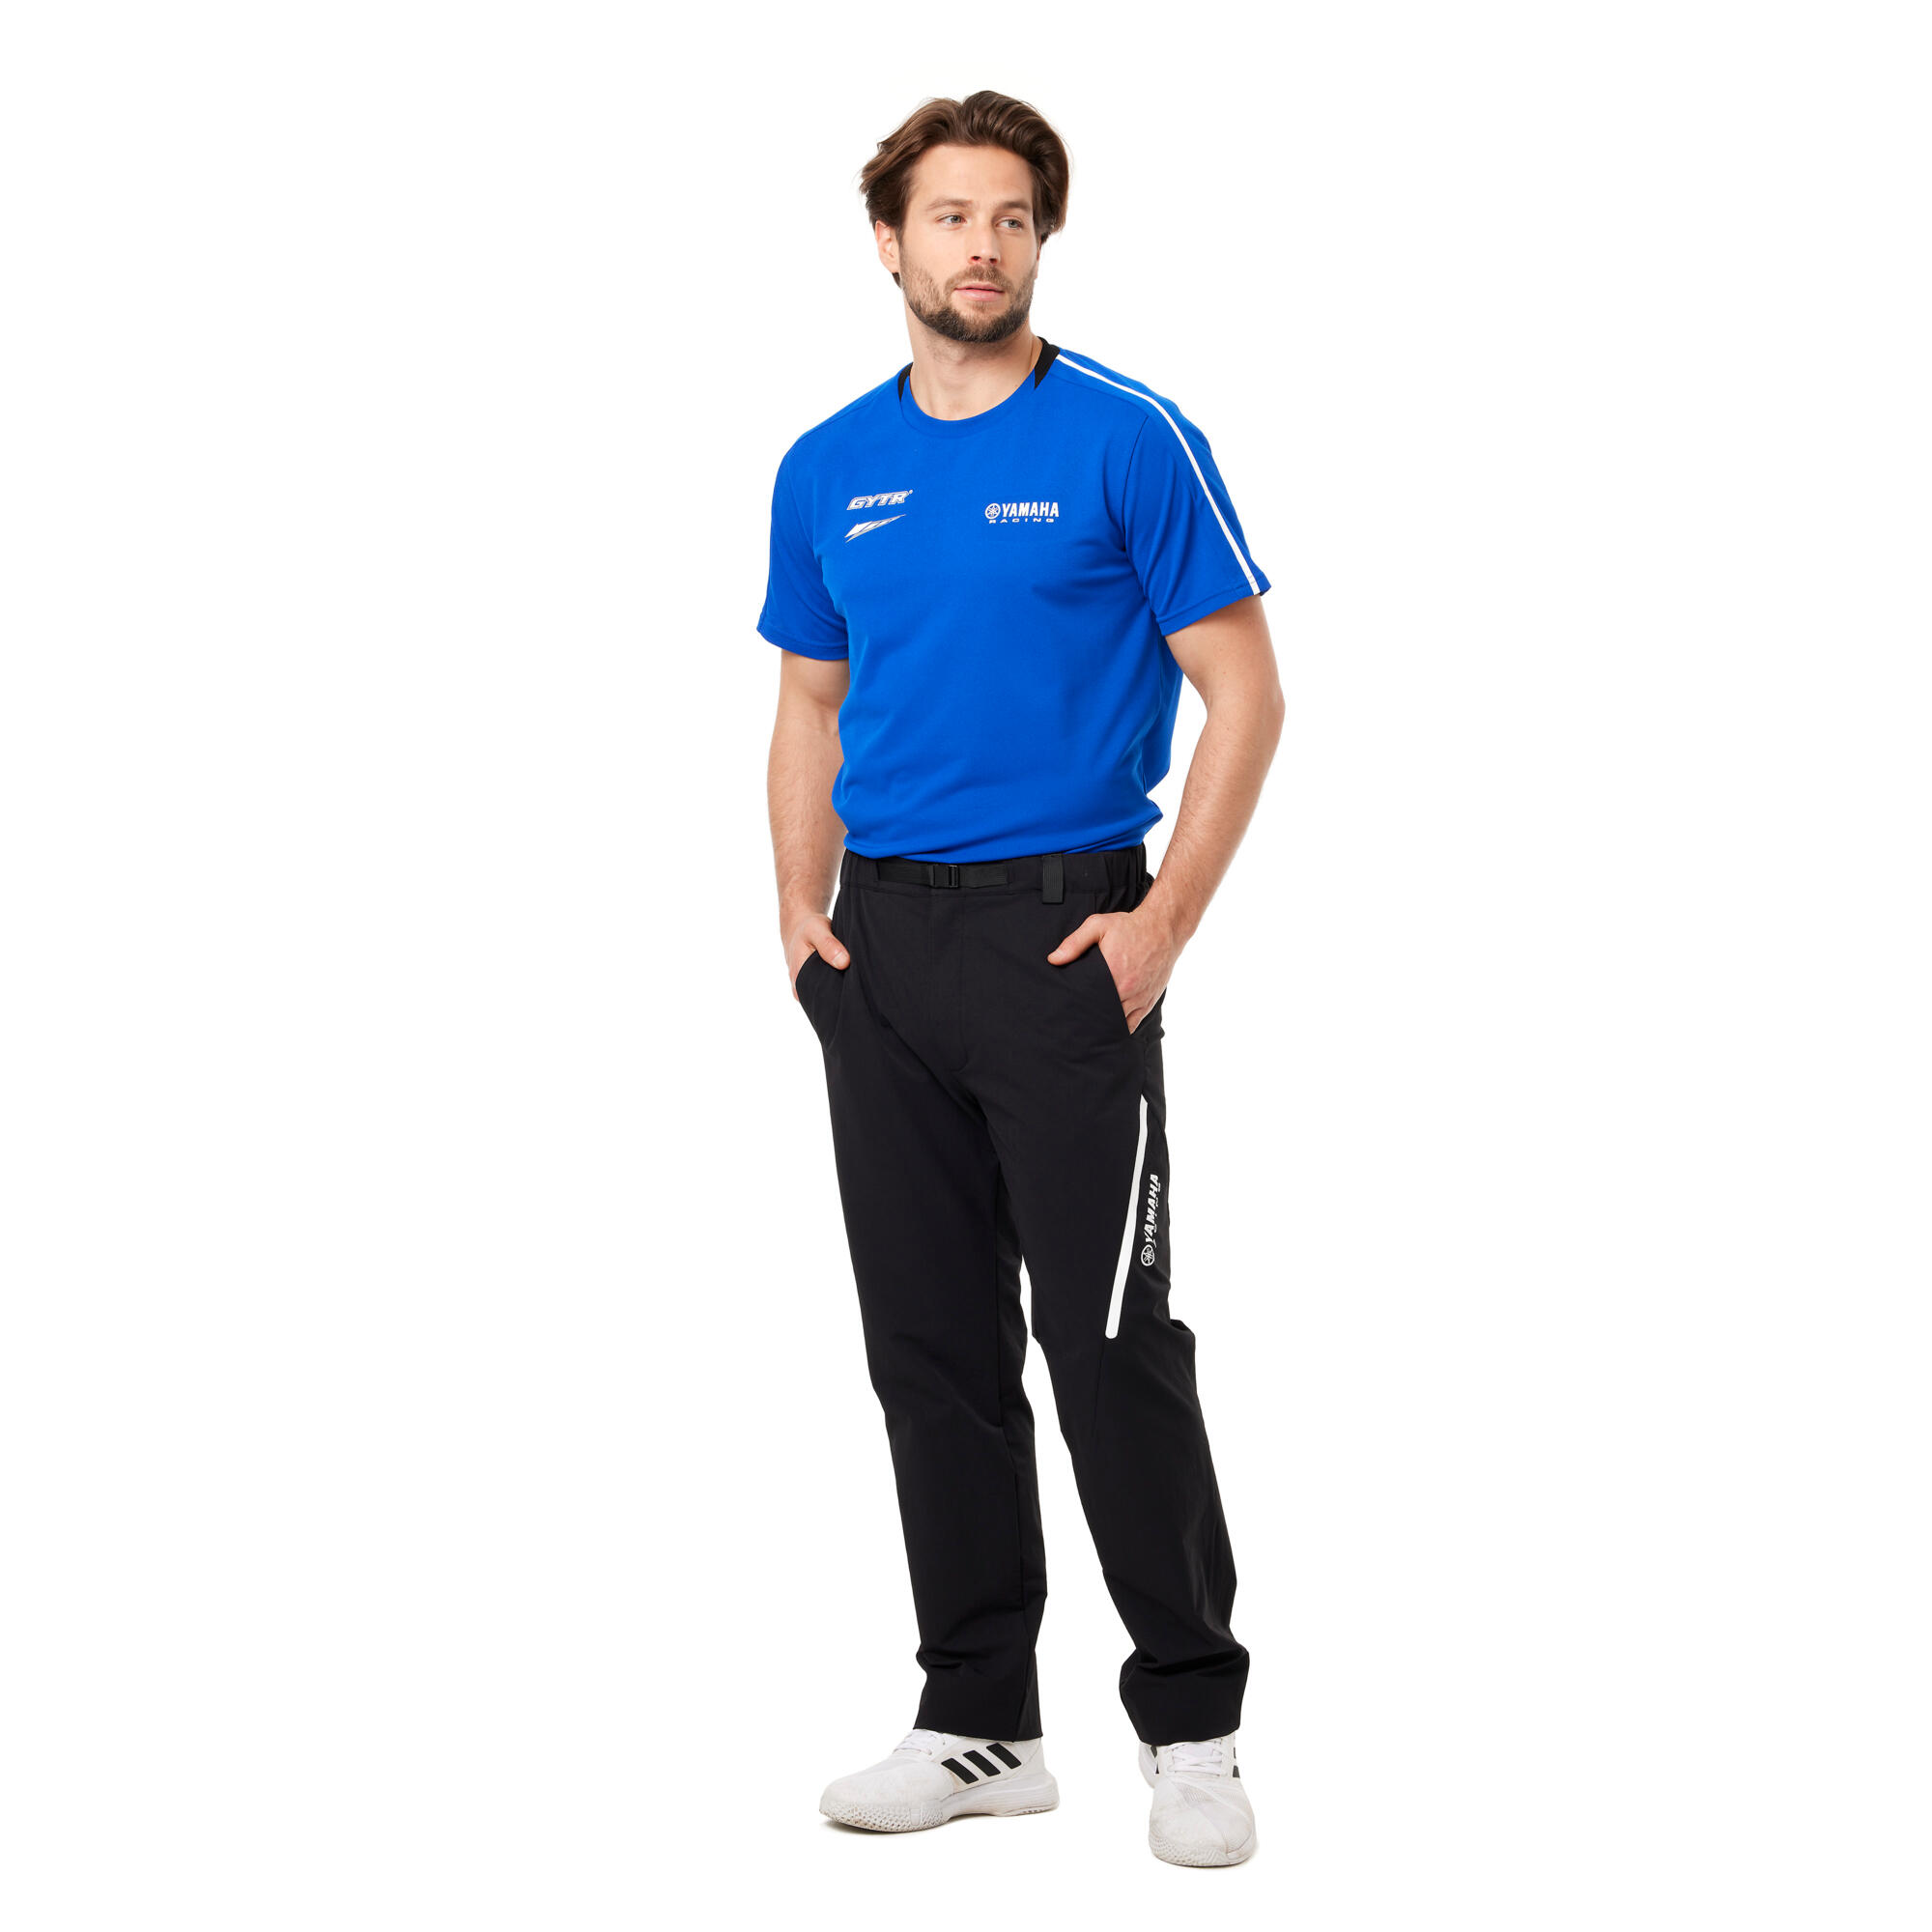 Paddock Blue T-Shirt Men - Clothing & Merchandise - Yamaha Motor